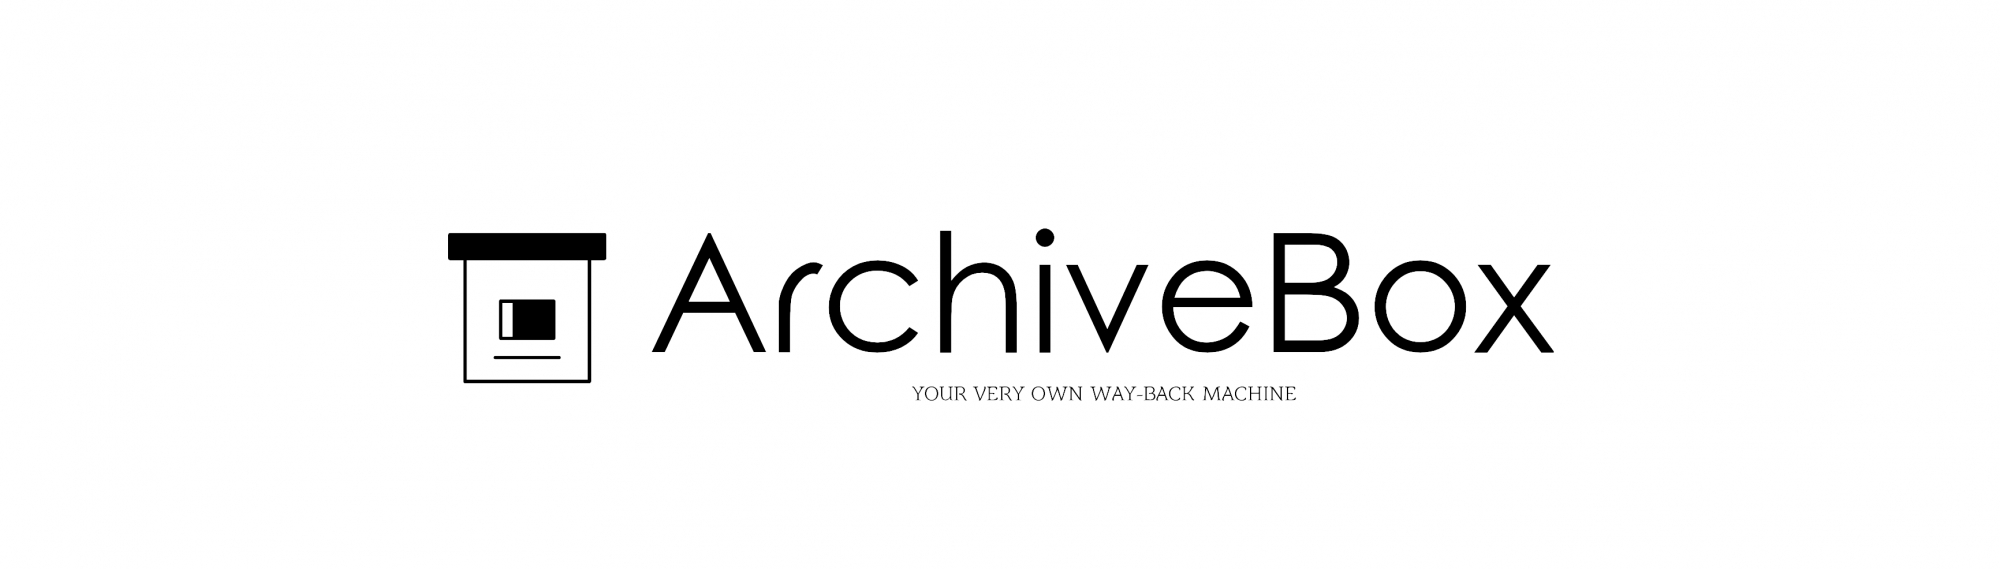 archivebox